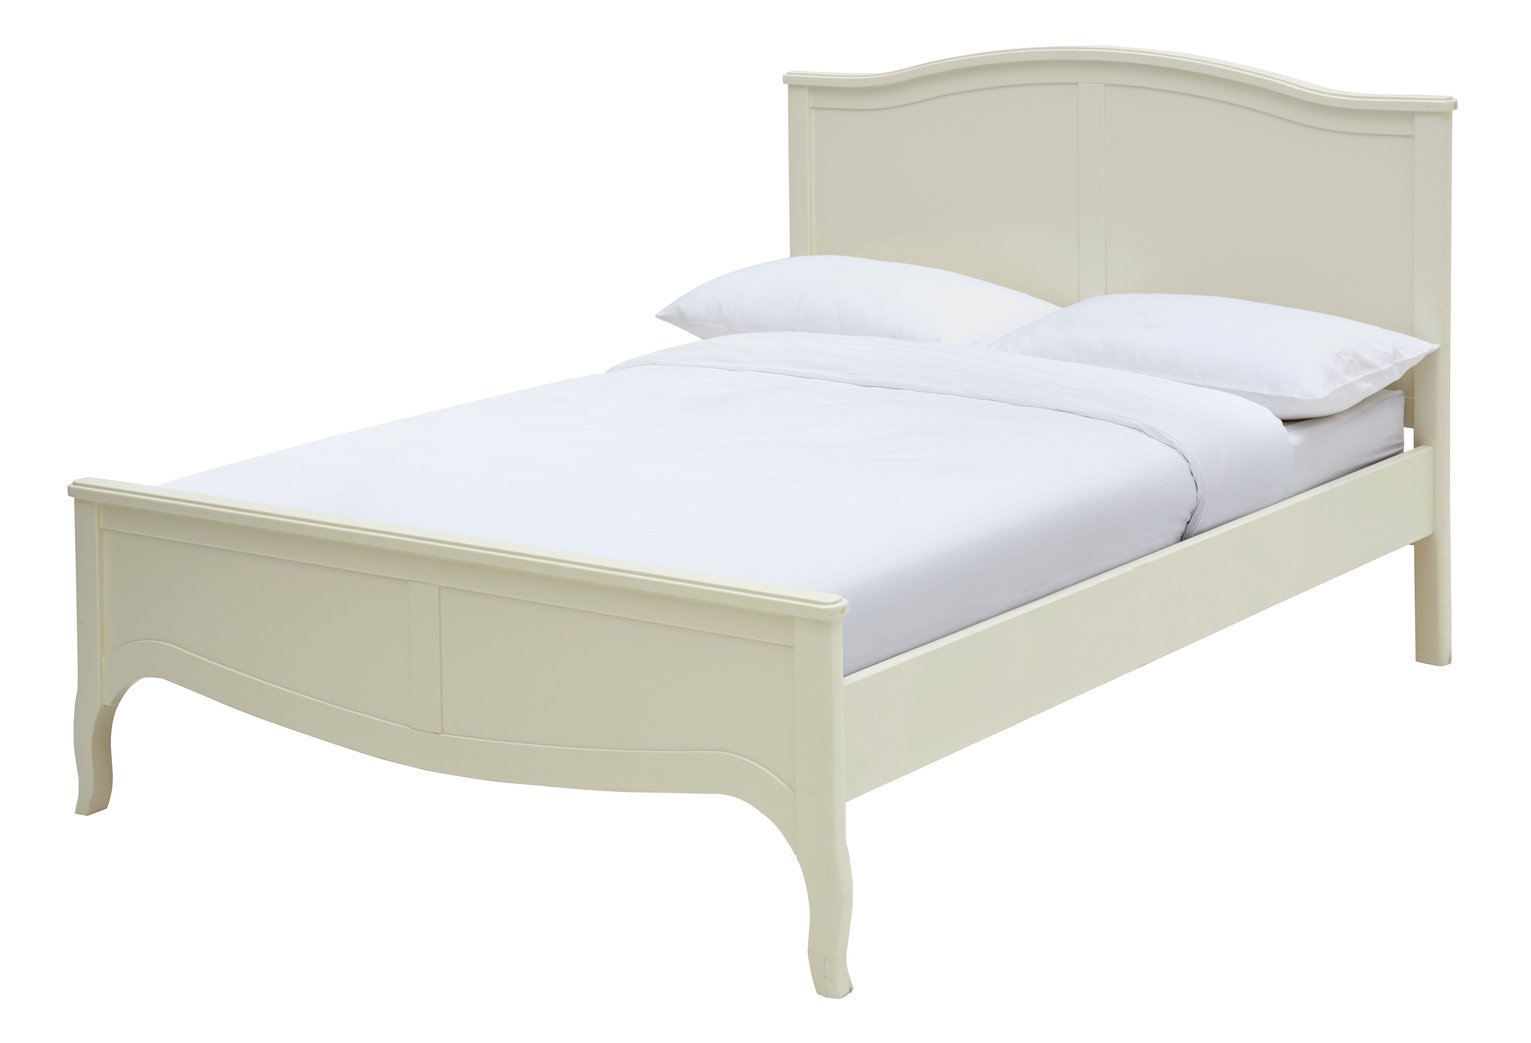 Argos Home Sophia Double Bed Frame - Cream